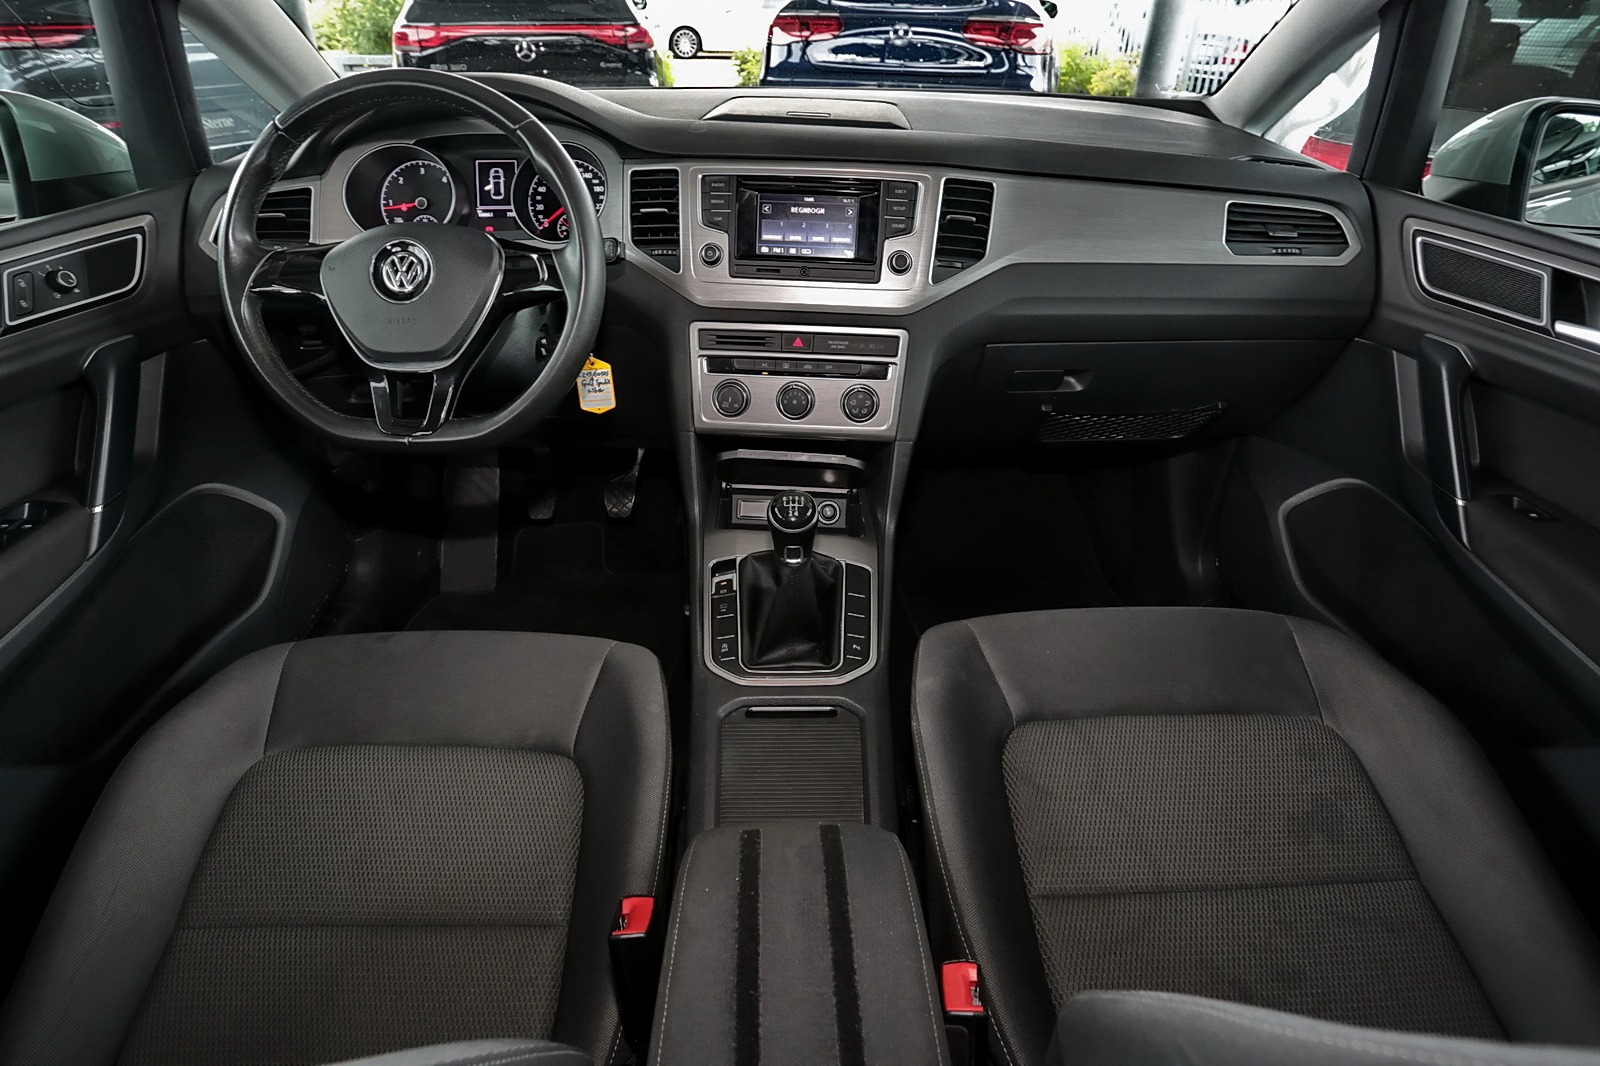 VW Golf Sportsvan 1.6 TDI Comfortline Einparkhilfe 